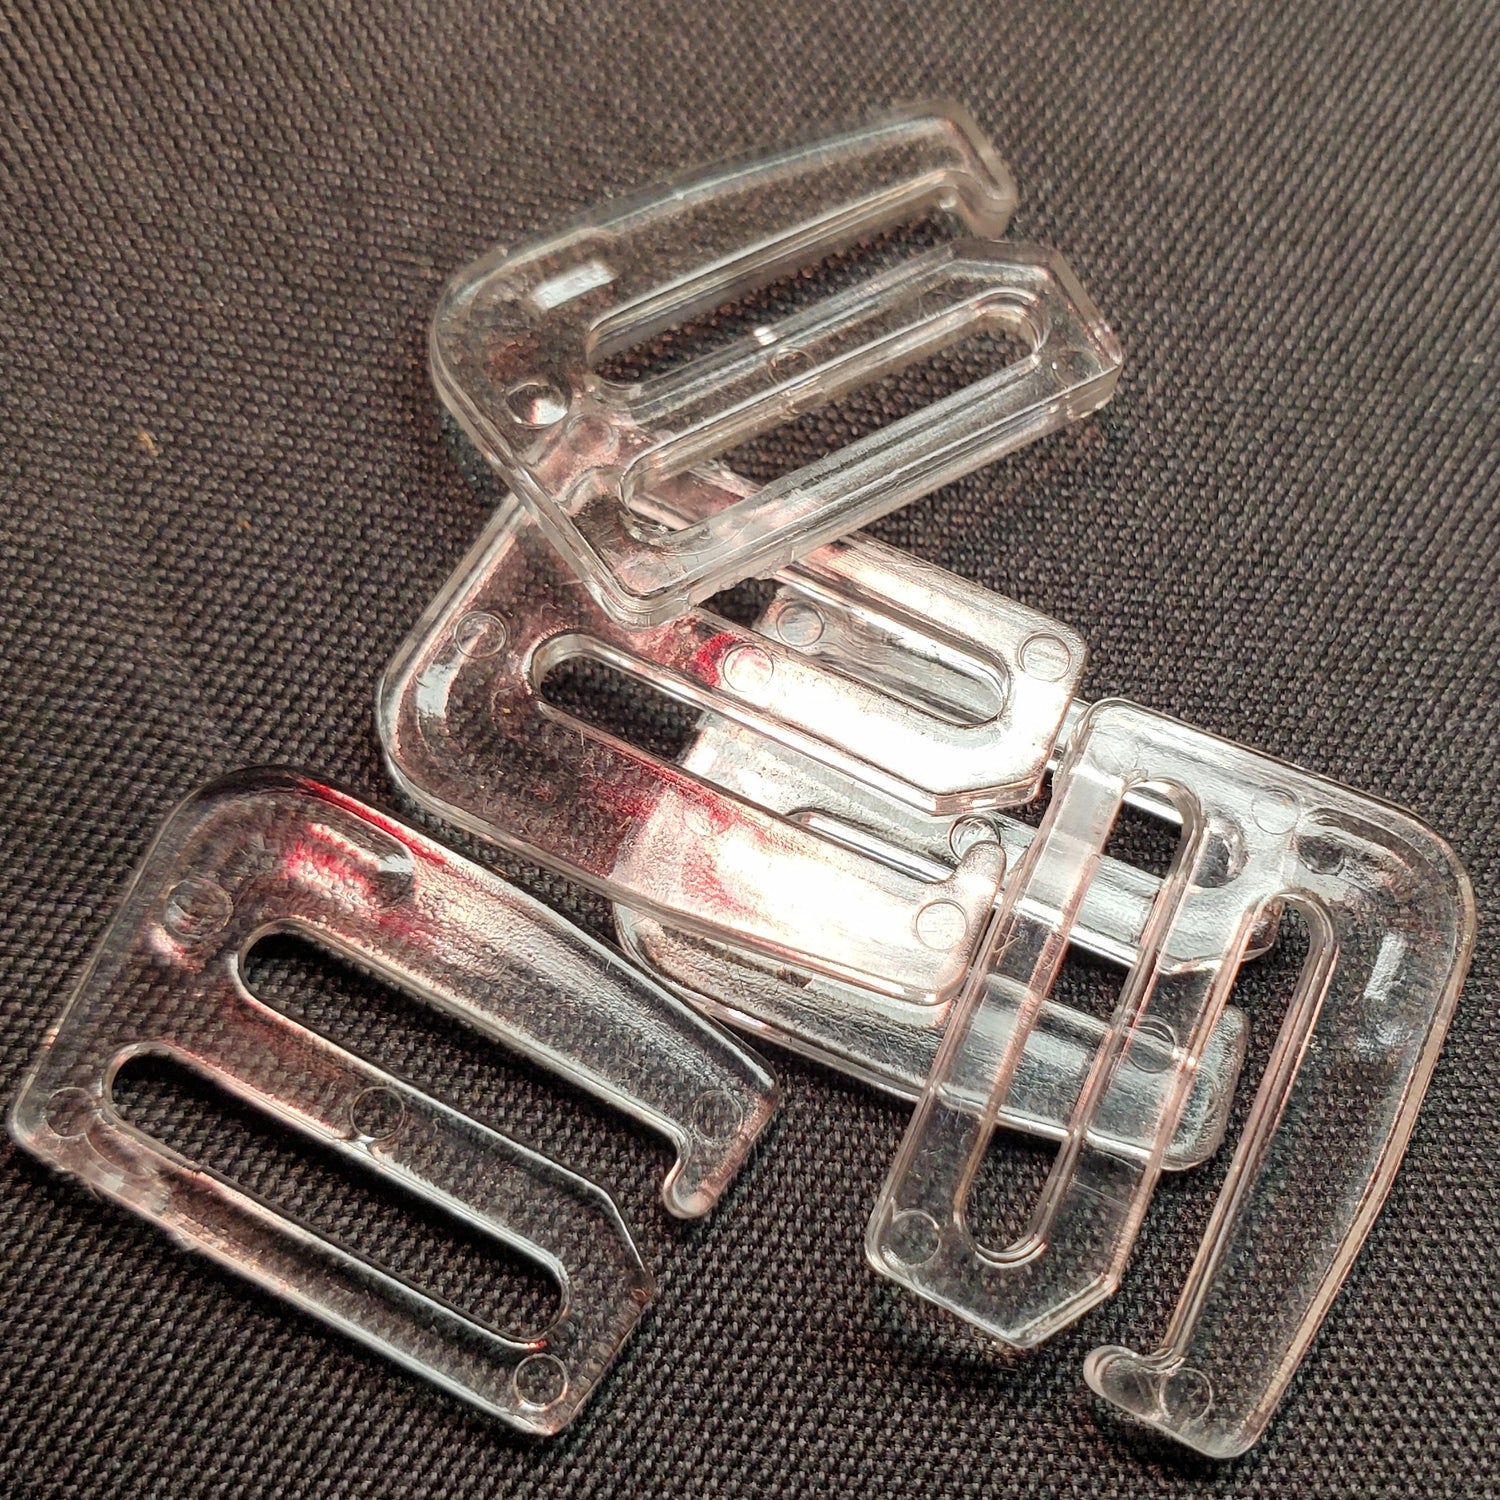 Clear Polycarbonate Plastic Bra Hooks - 3 Sizes